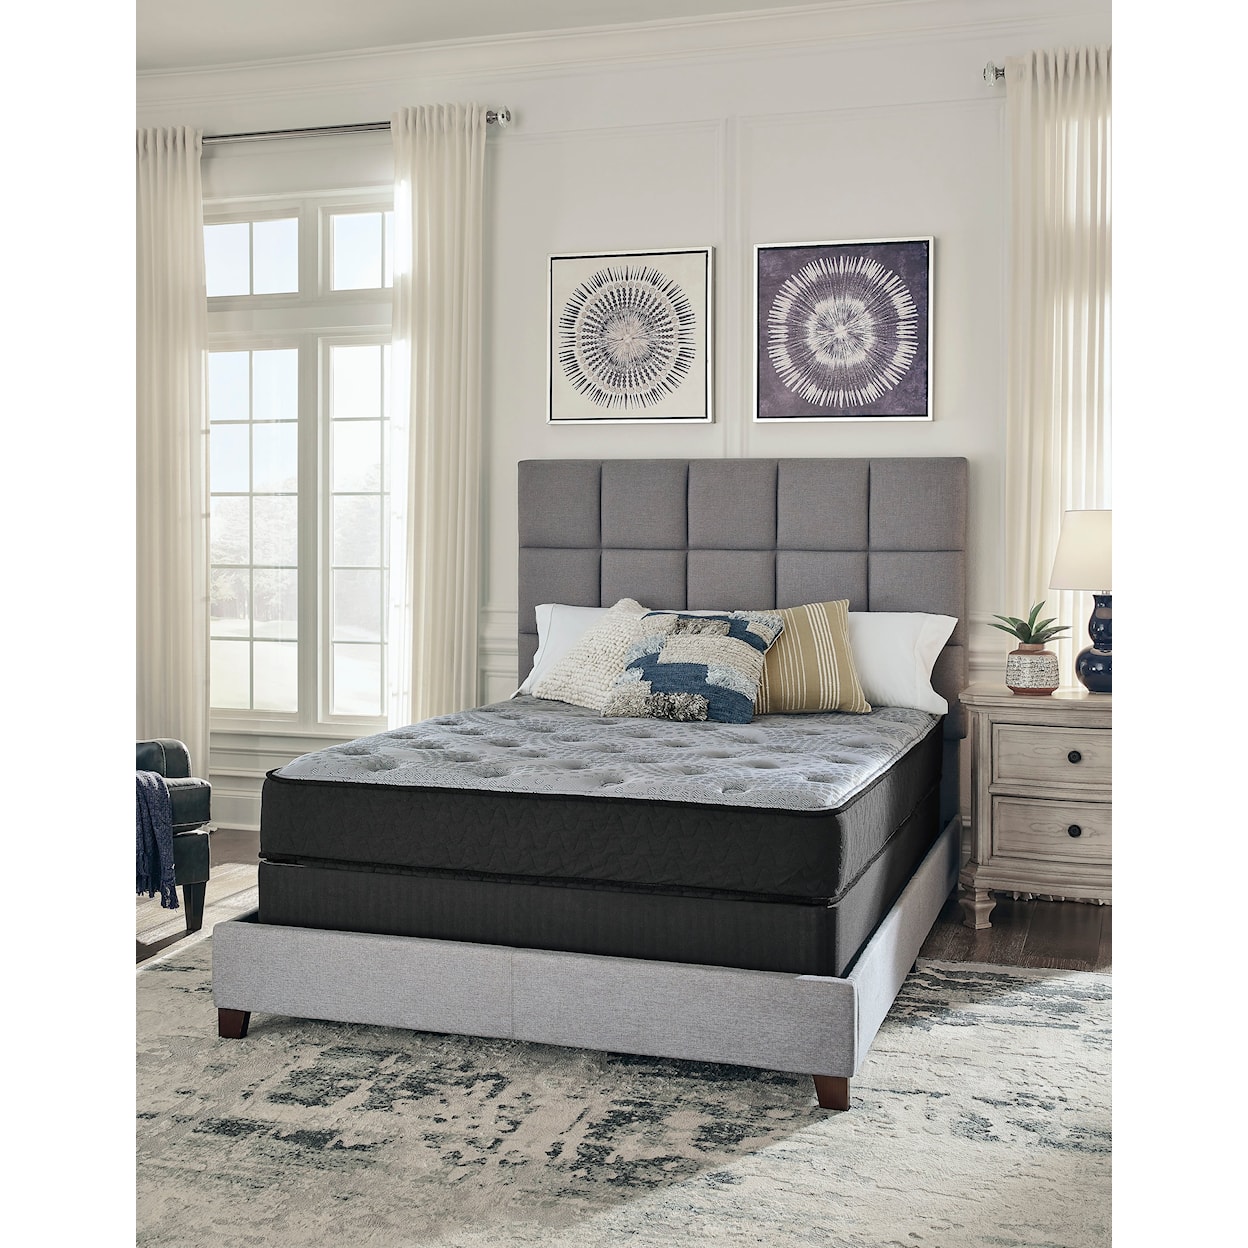 Sierra Sleep Comfort Plus Comfort Plus Twin Mattress